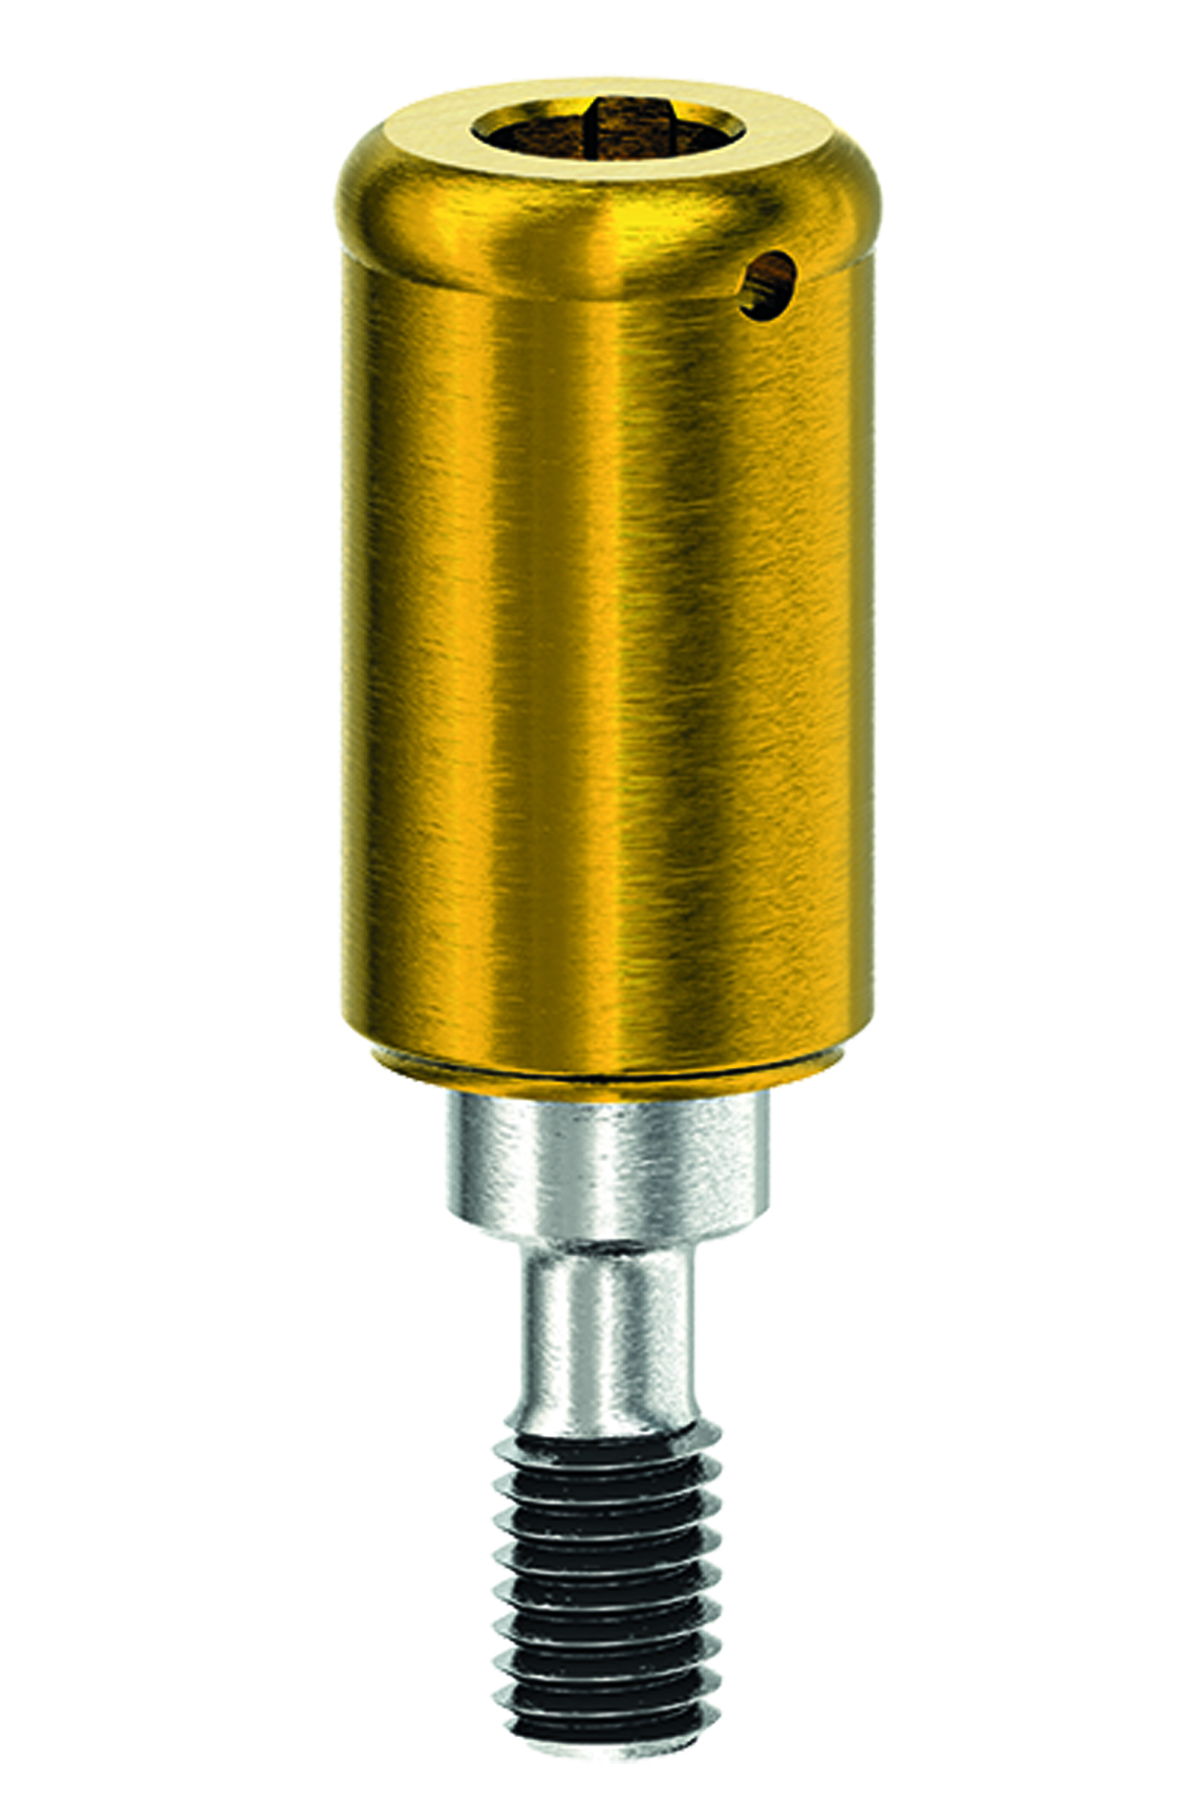 Абатмент Локатор  (Ø 3.3 мм, шейка 5.0 мм) в комплекте с набором матриц 935722